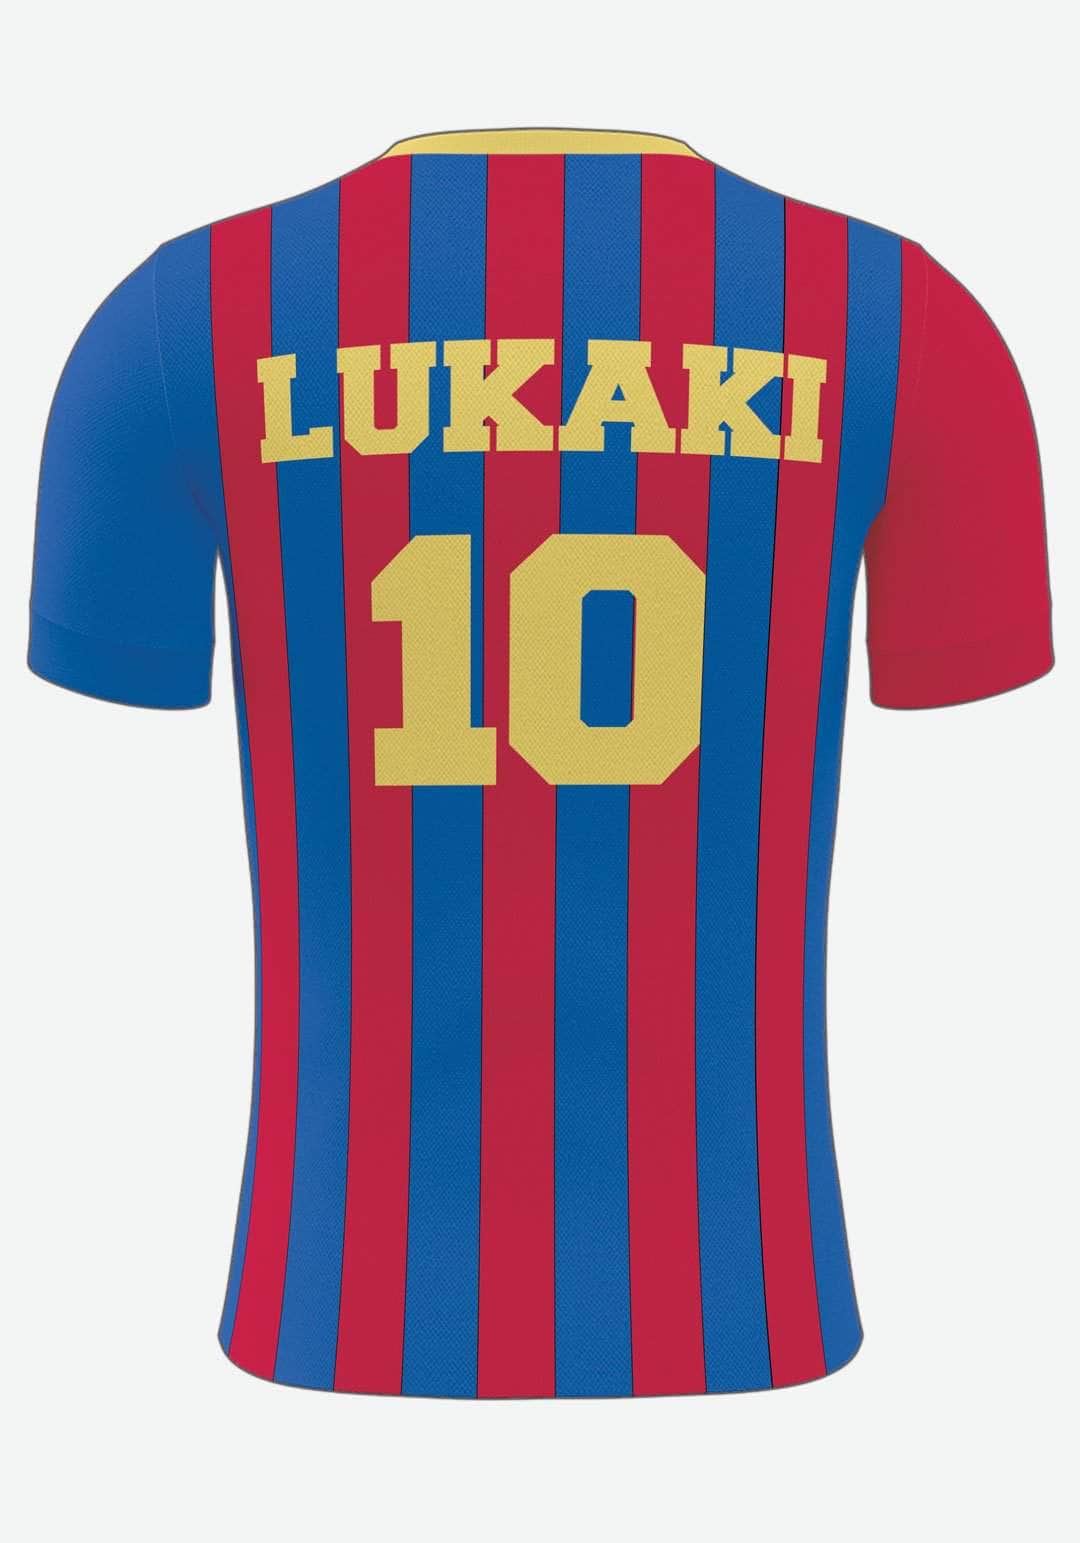 Barcelona Fotbollsaffisch - med ditt eget namn och nummer